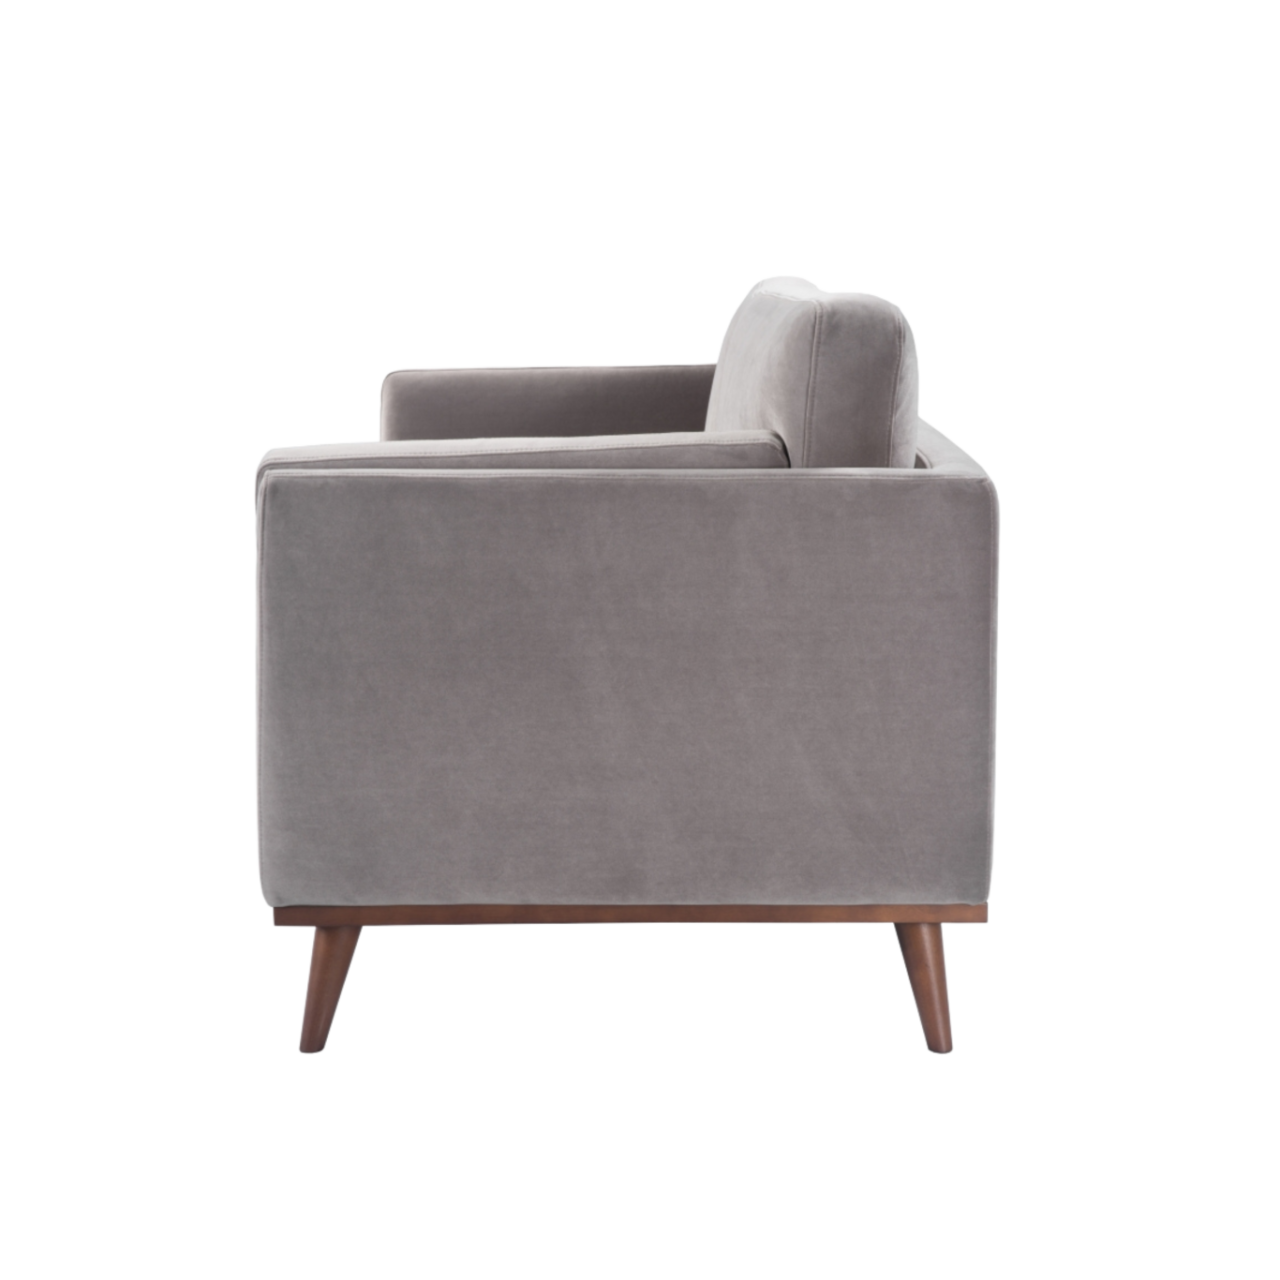 side view of simple modern 3 seater sofa in stone grey velvet upholstery